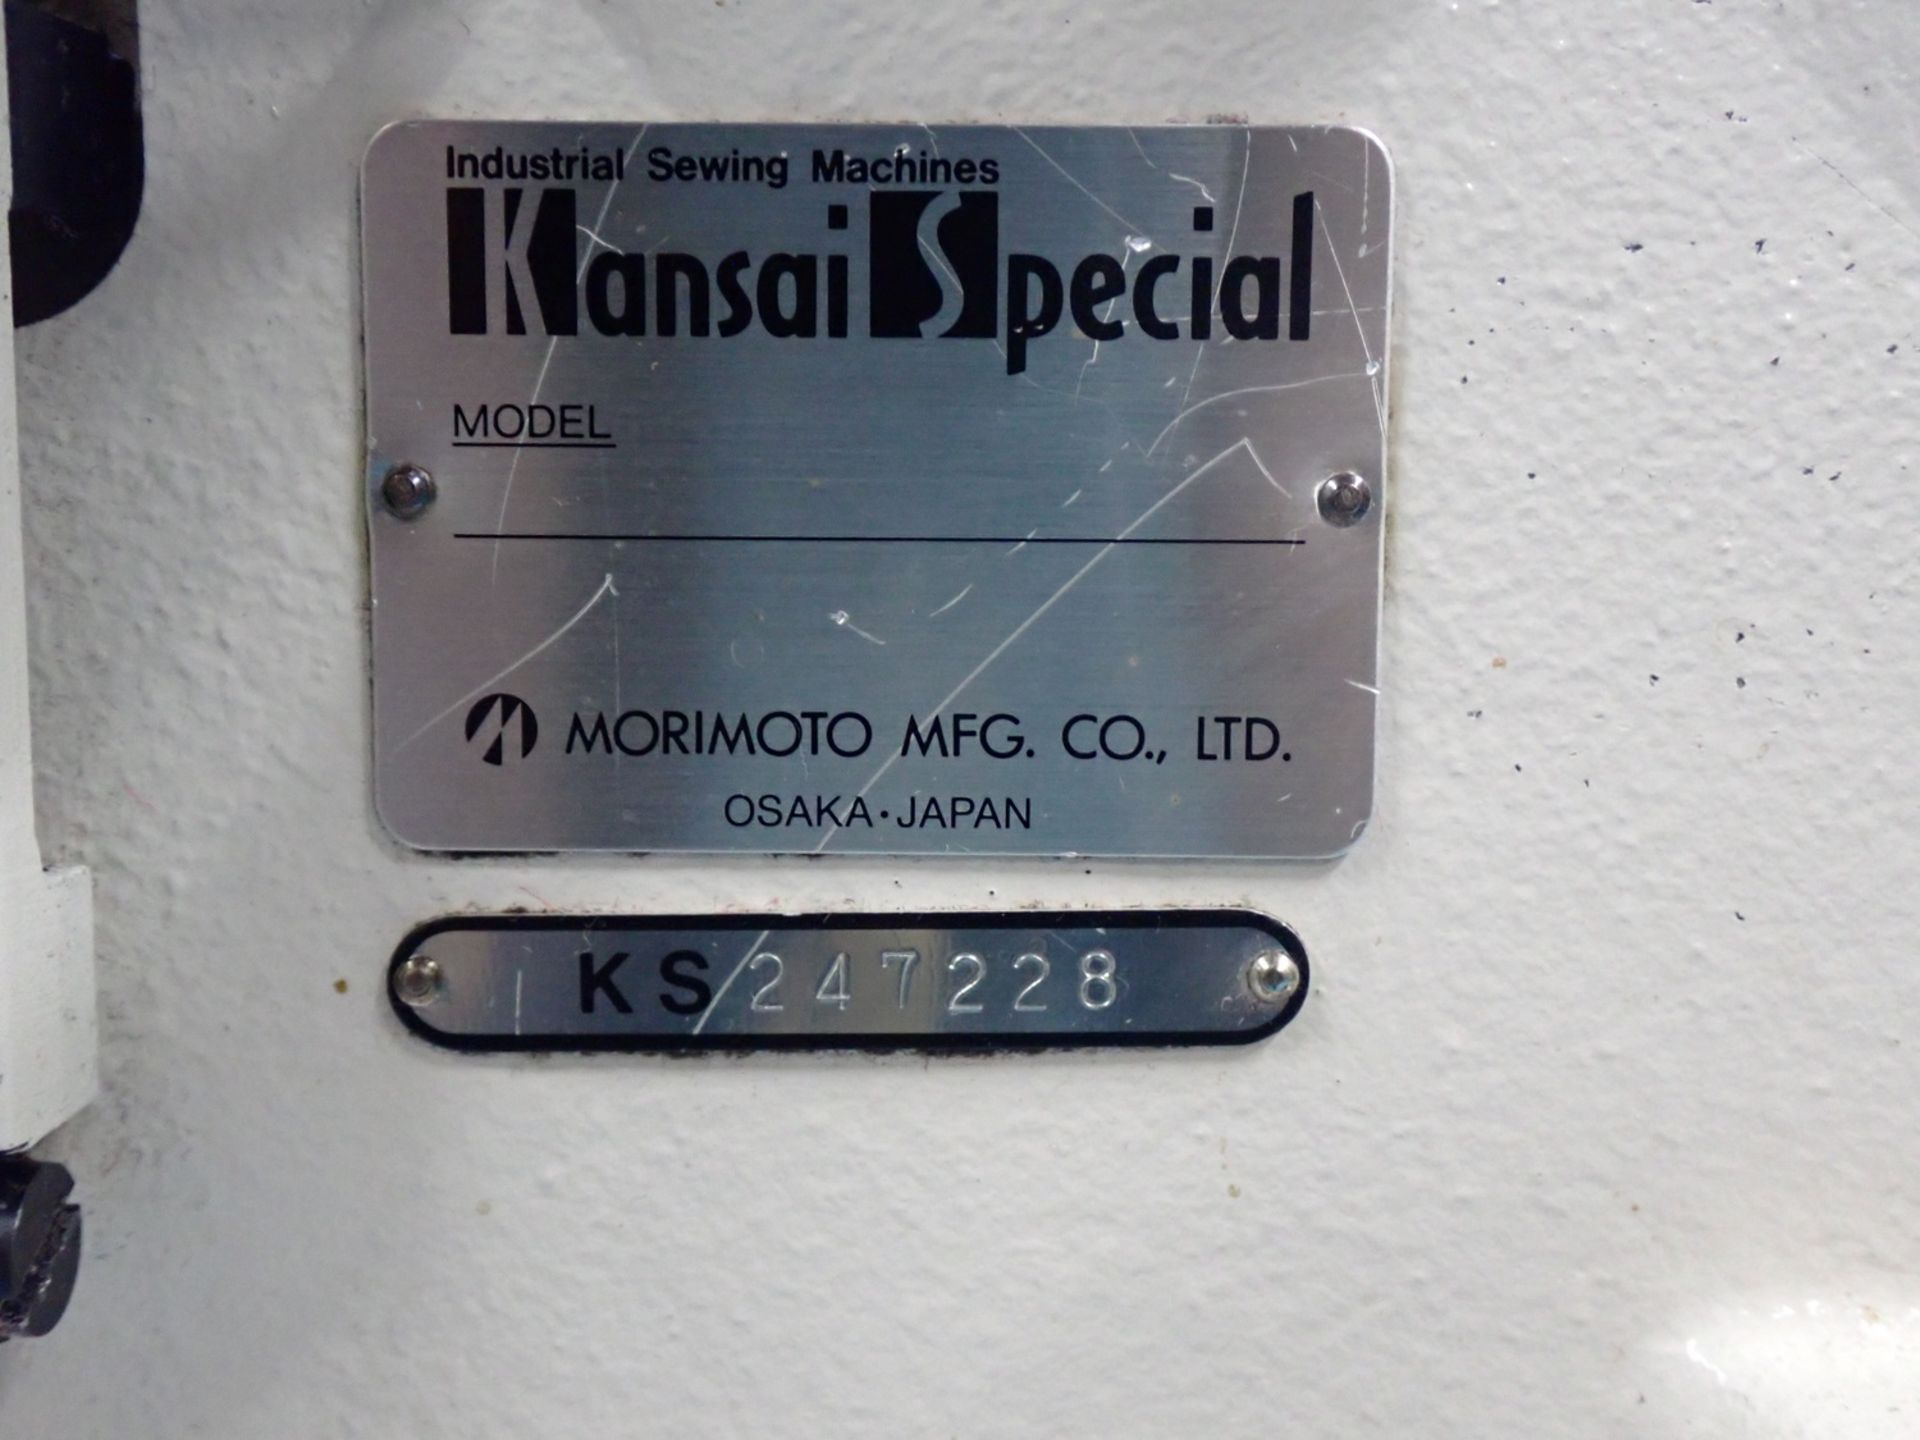 KANSAI RX-9000 3 NEEDLE CYLINDER COVER STITCH W/ NEEDLE POSITIONER S/N 247228 (220V) - Image 2 of 7